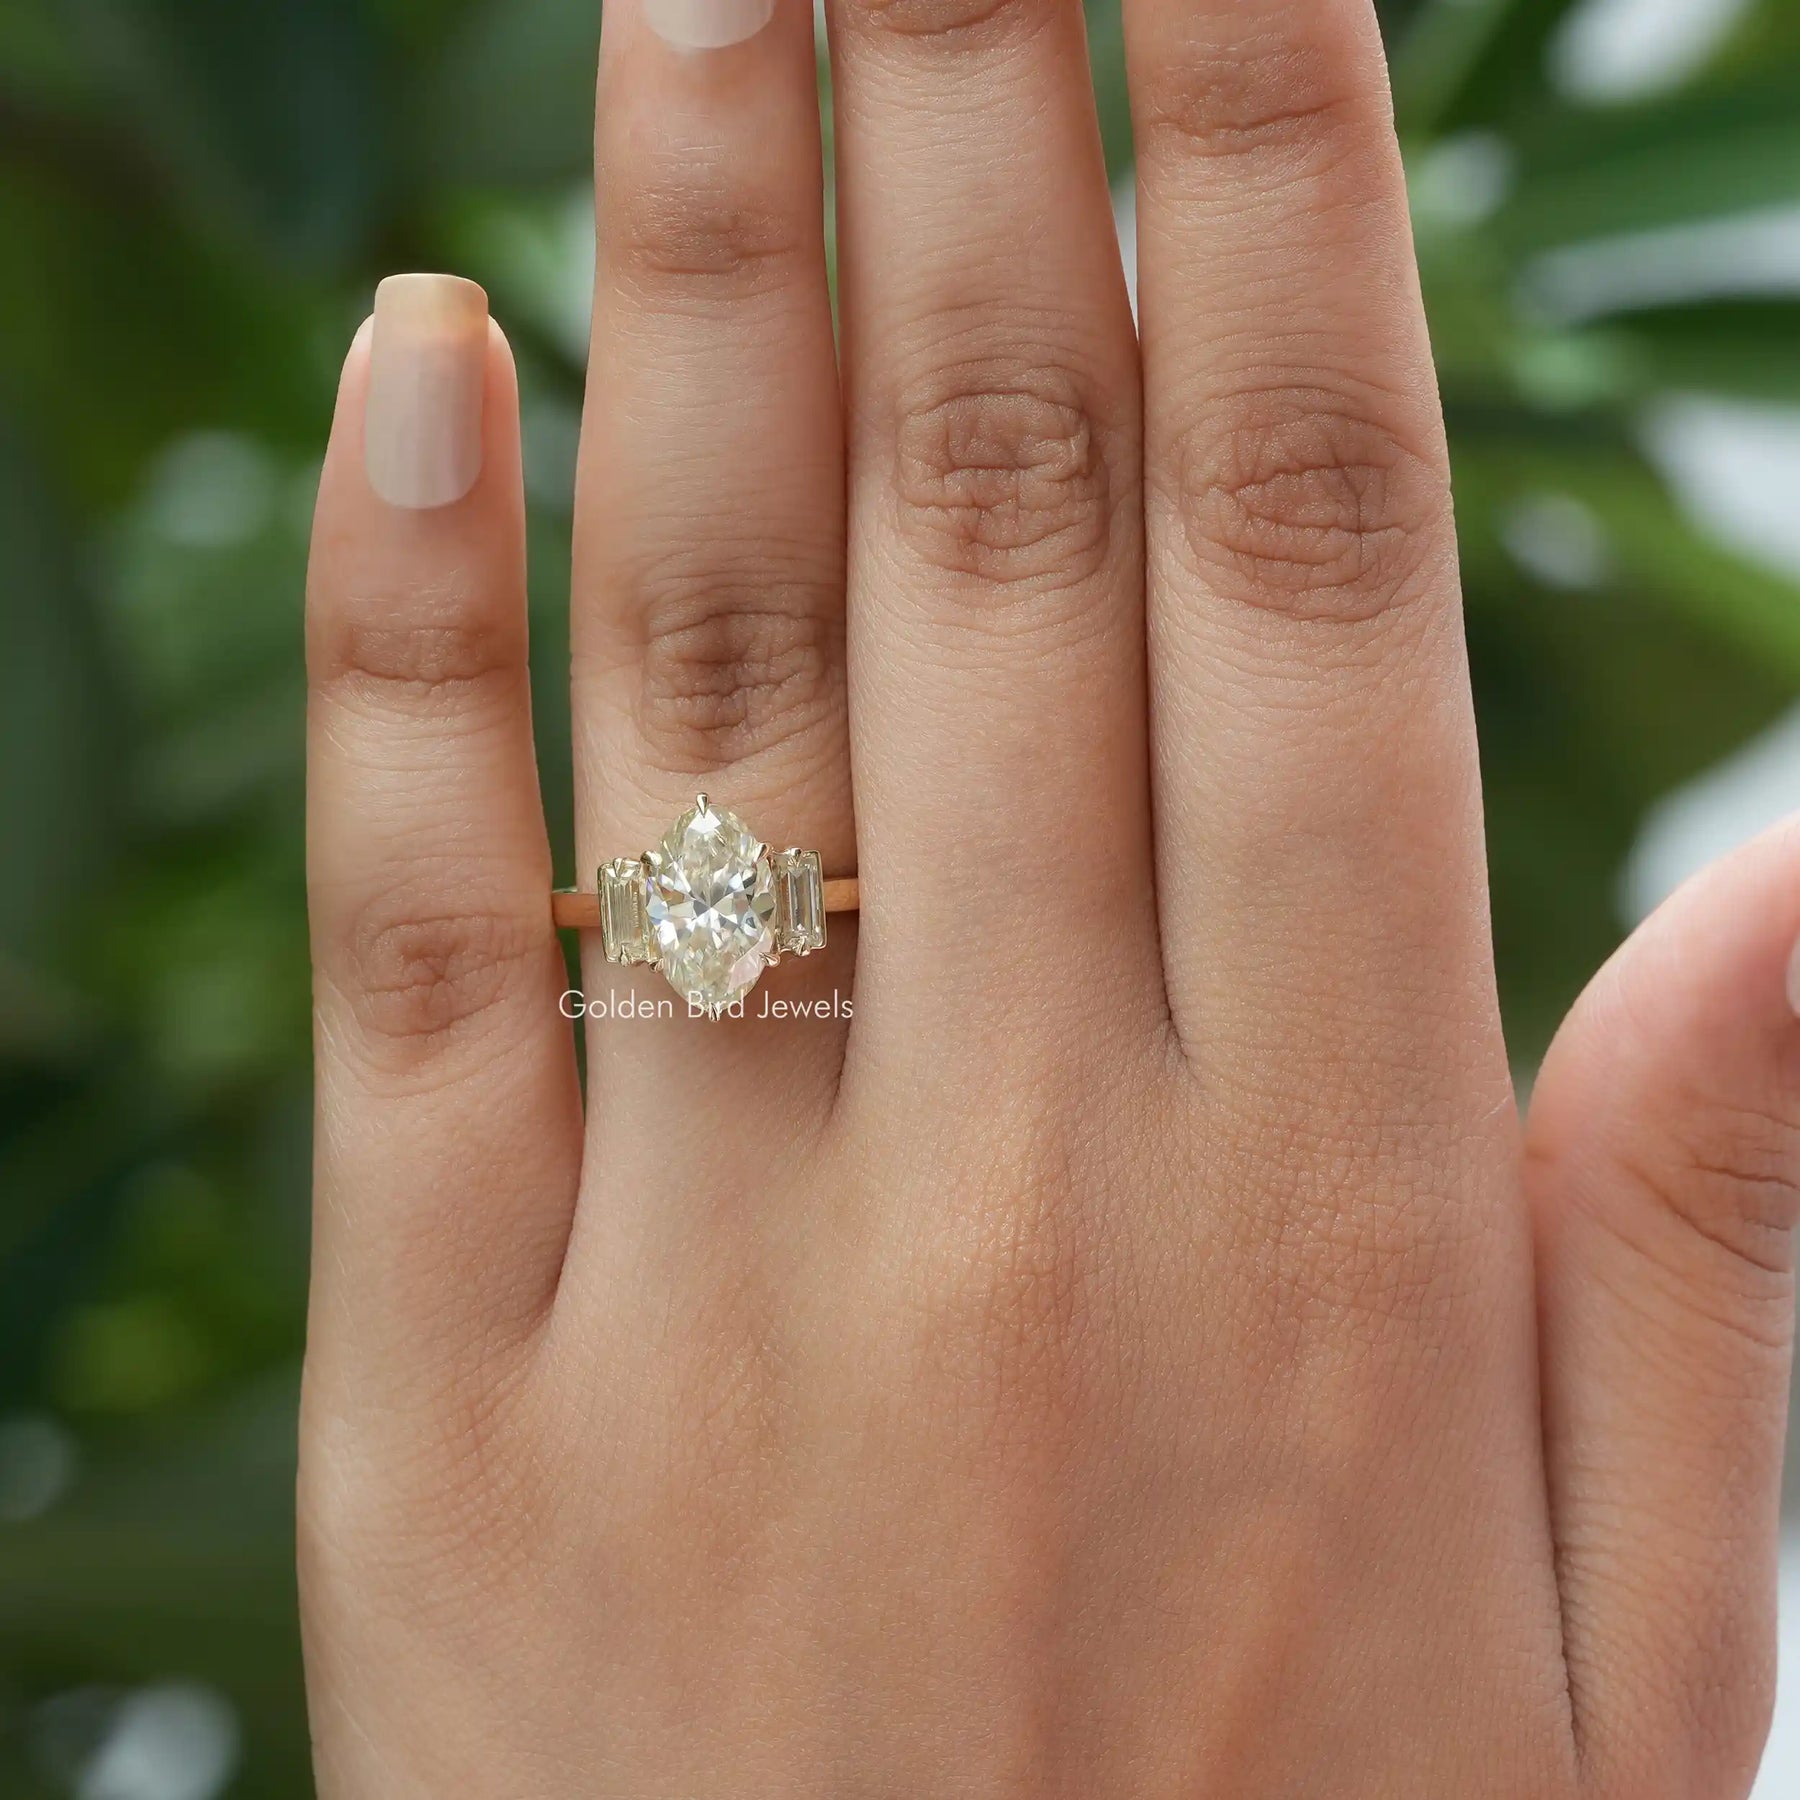 22k Gold Ring Beautiful Enameled Stone Studded Ladies Jewelry Select Size  Ring12 | eBay